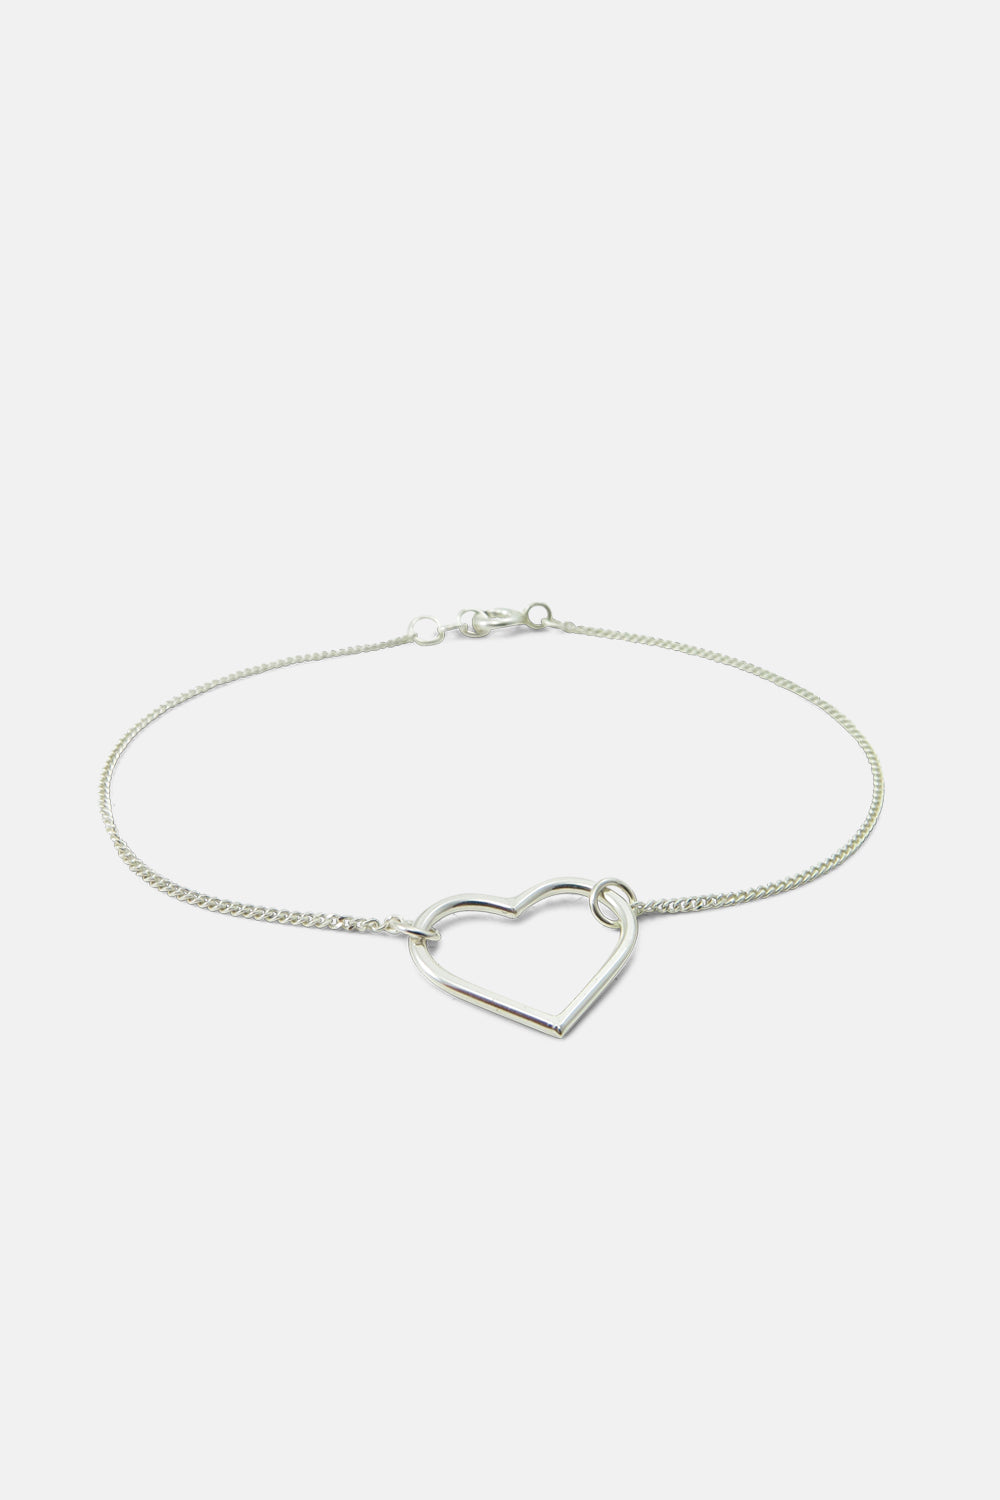 Bracelet with heart